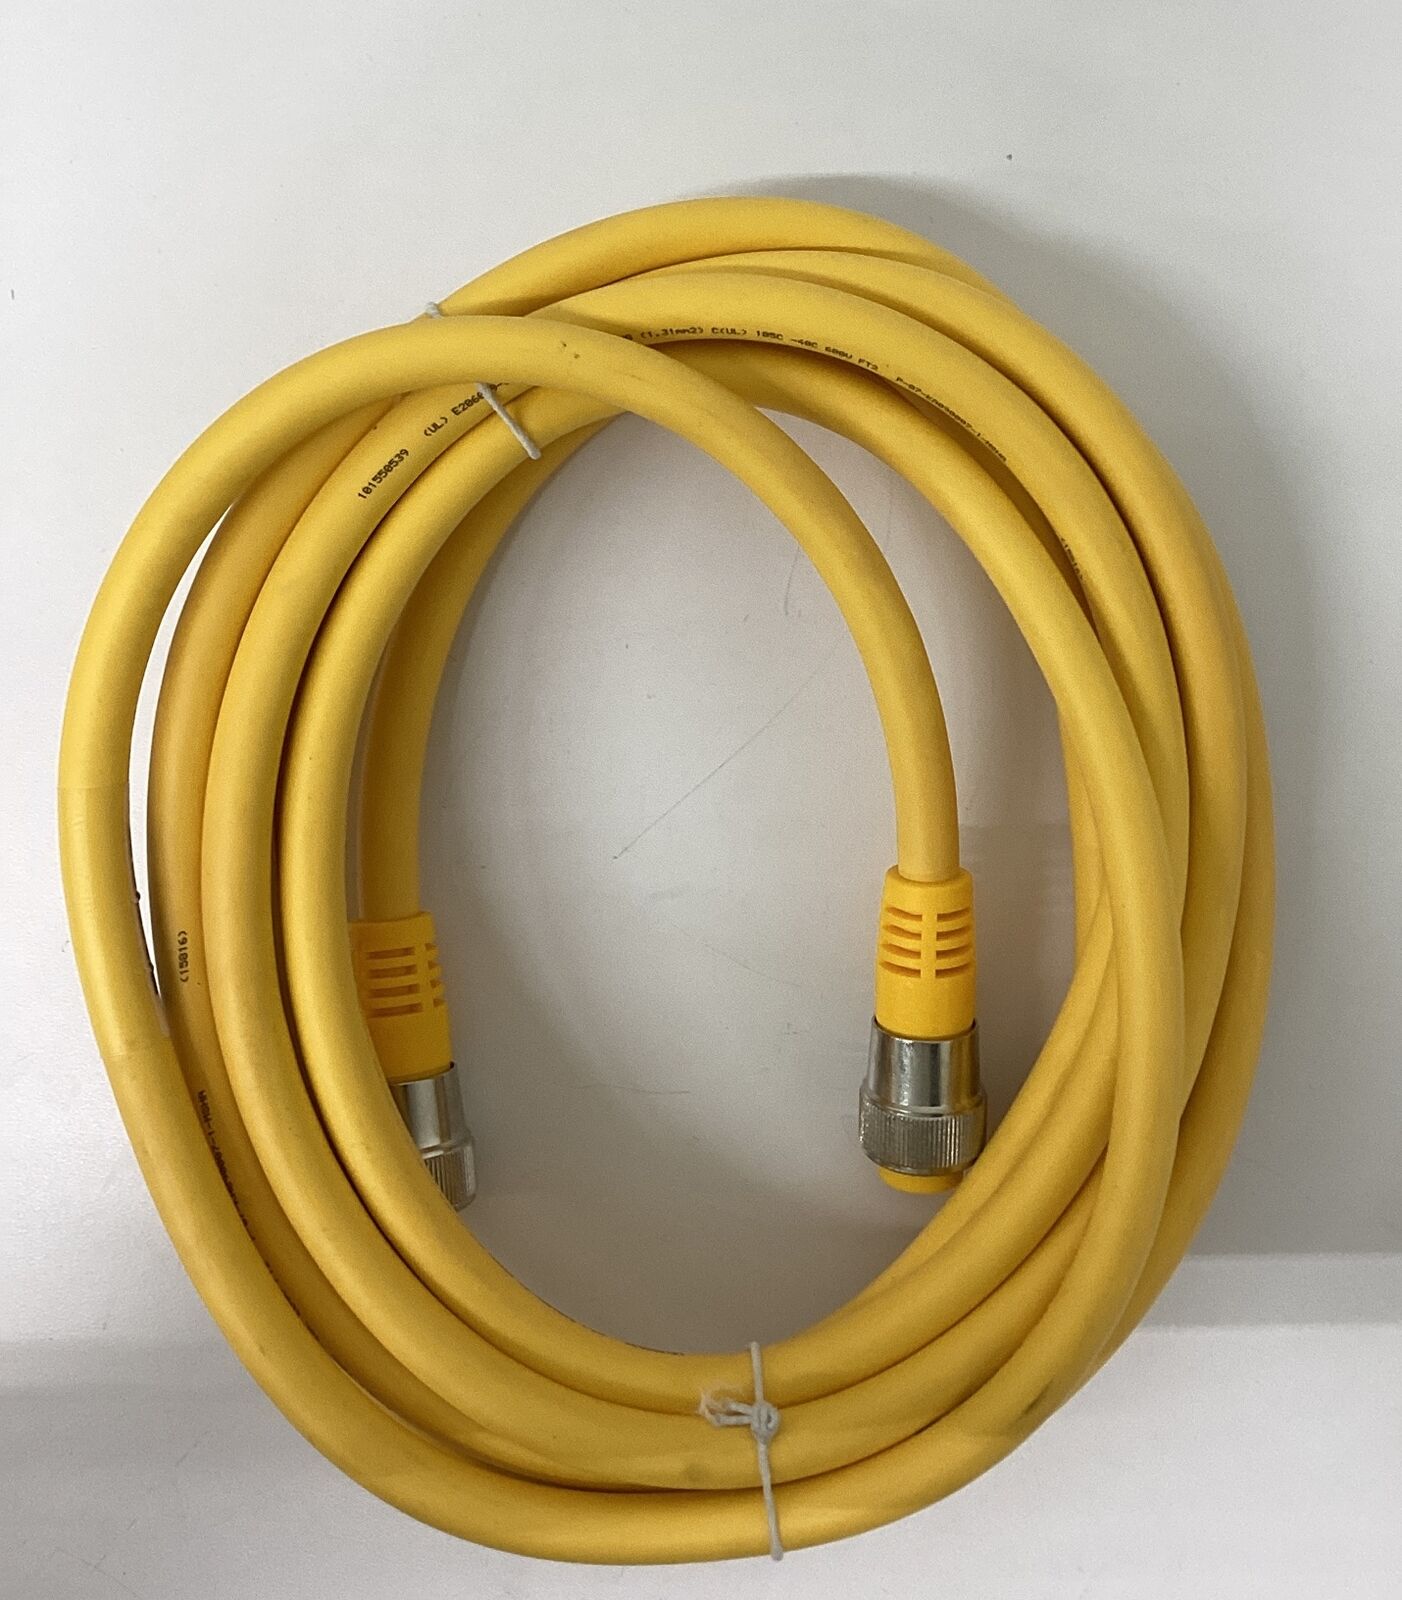 Turck RYM-RKM56-5M 5-Pole Male/Female Minifast Cable 5-meters (CBL162)